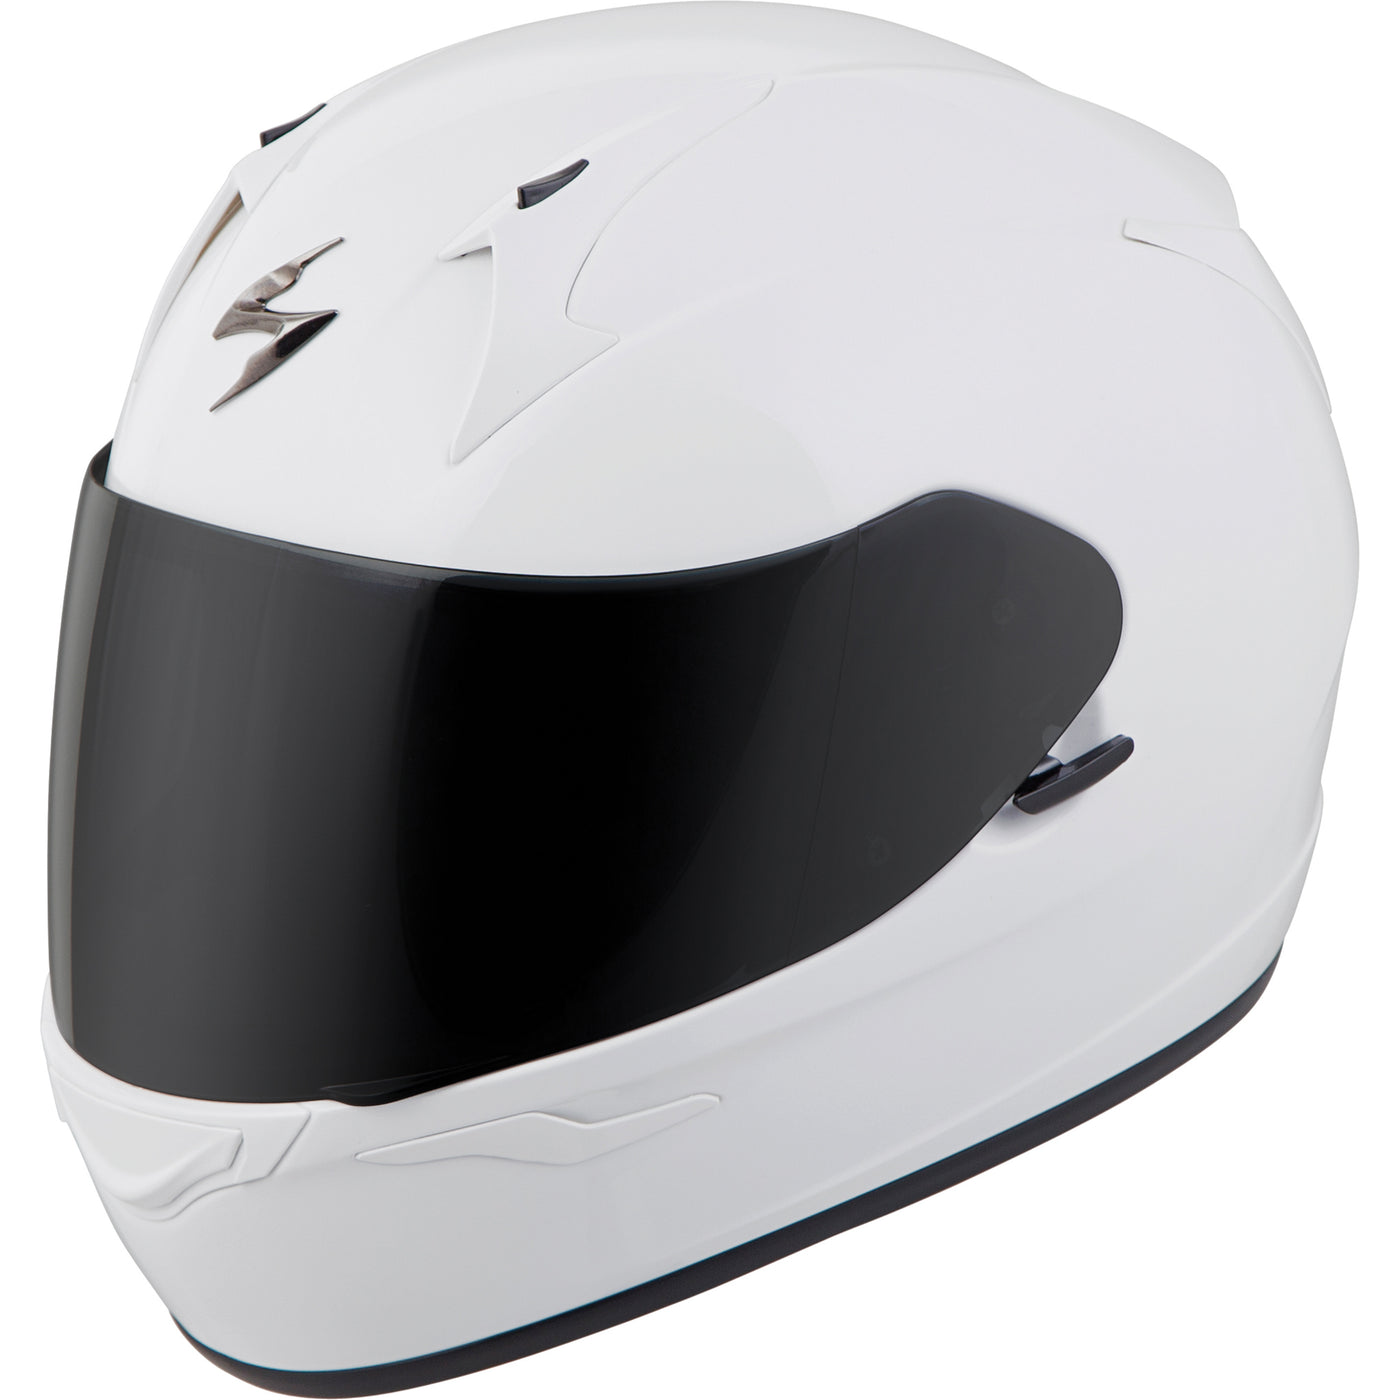 SCORPION EXO EXO-R320 Solid Helmet